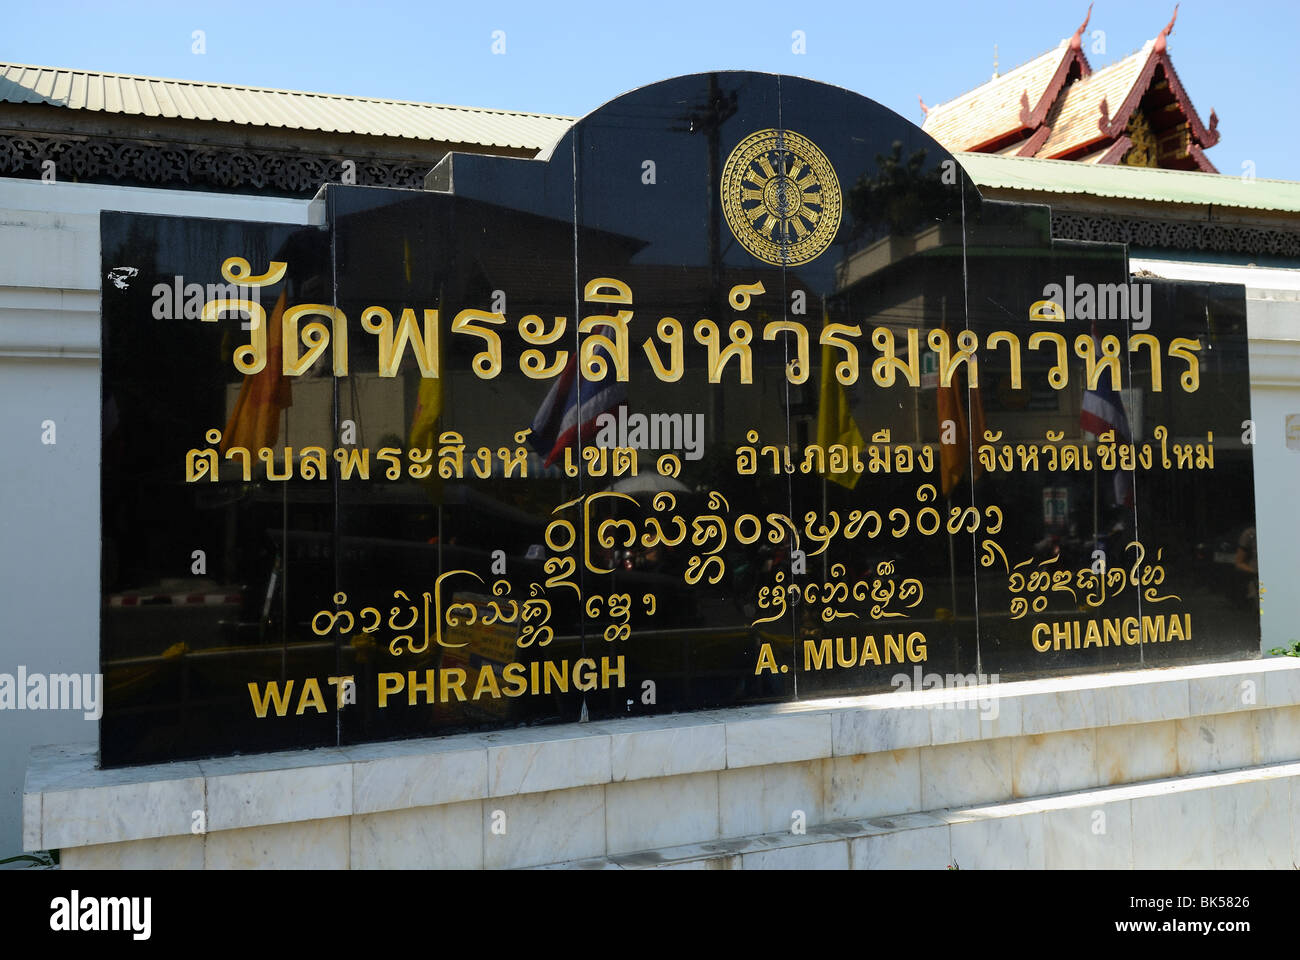 Wat Phra Singh tempio buddista in Chiang Mai, Thailandia, Sud-est asiatico Foto Stock